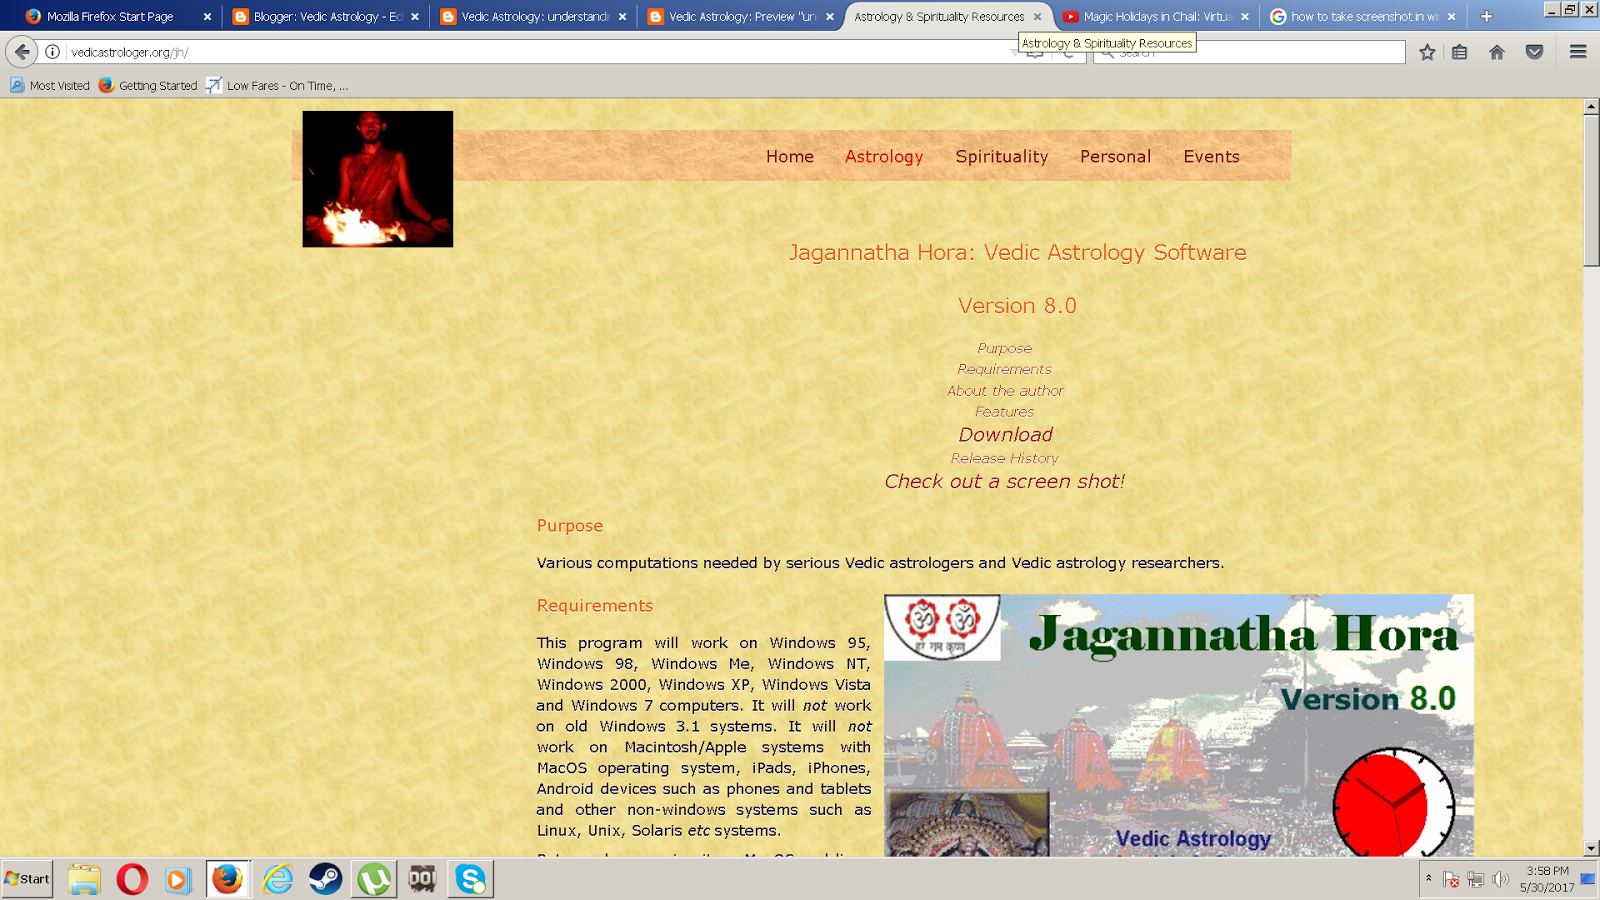 free download jagannatha hora software